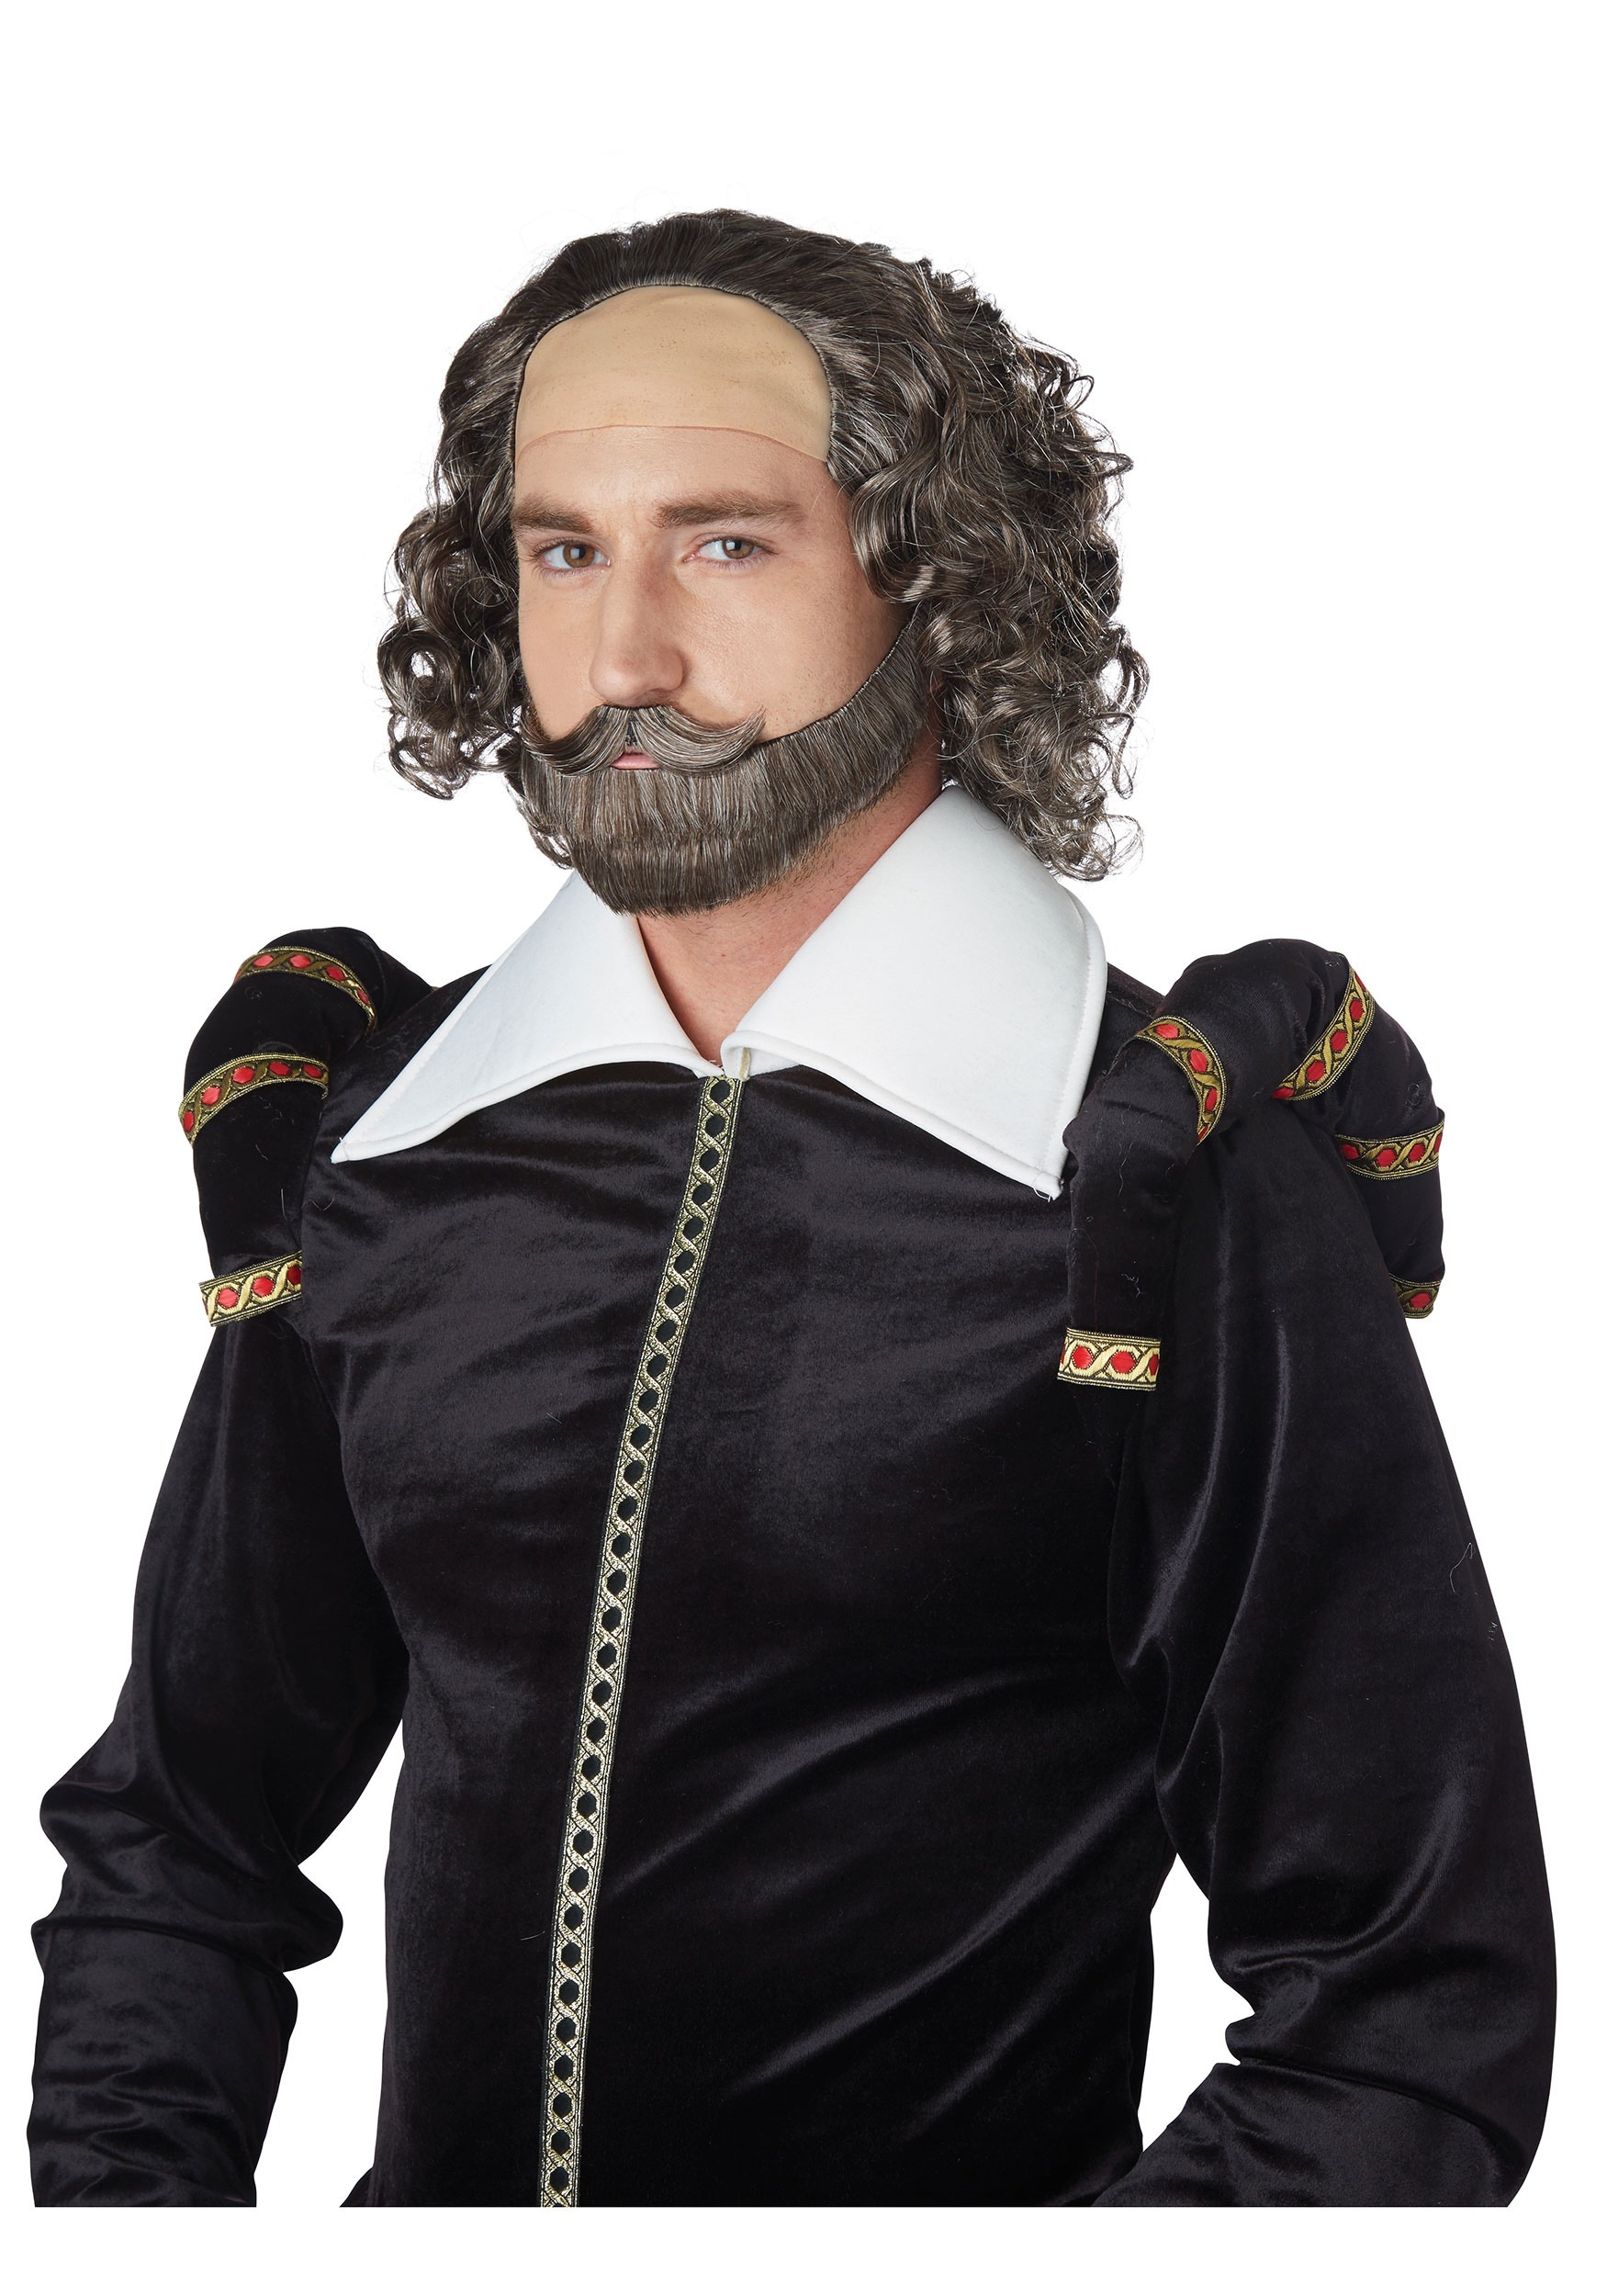 Shakespeare Beard and Wig Set for Men